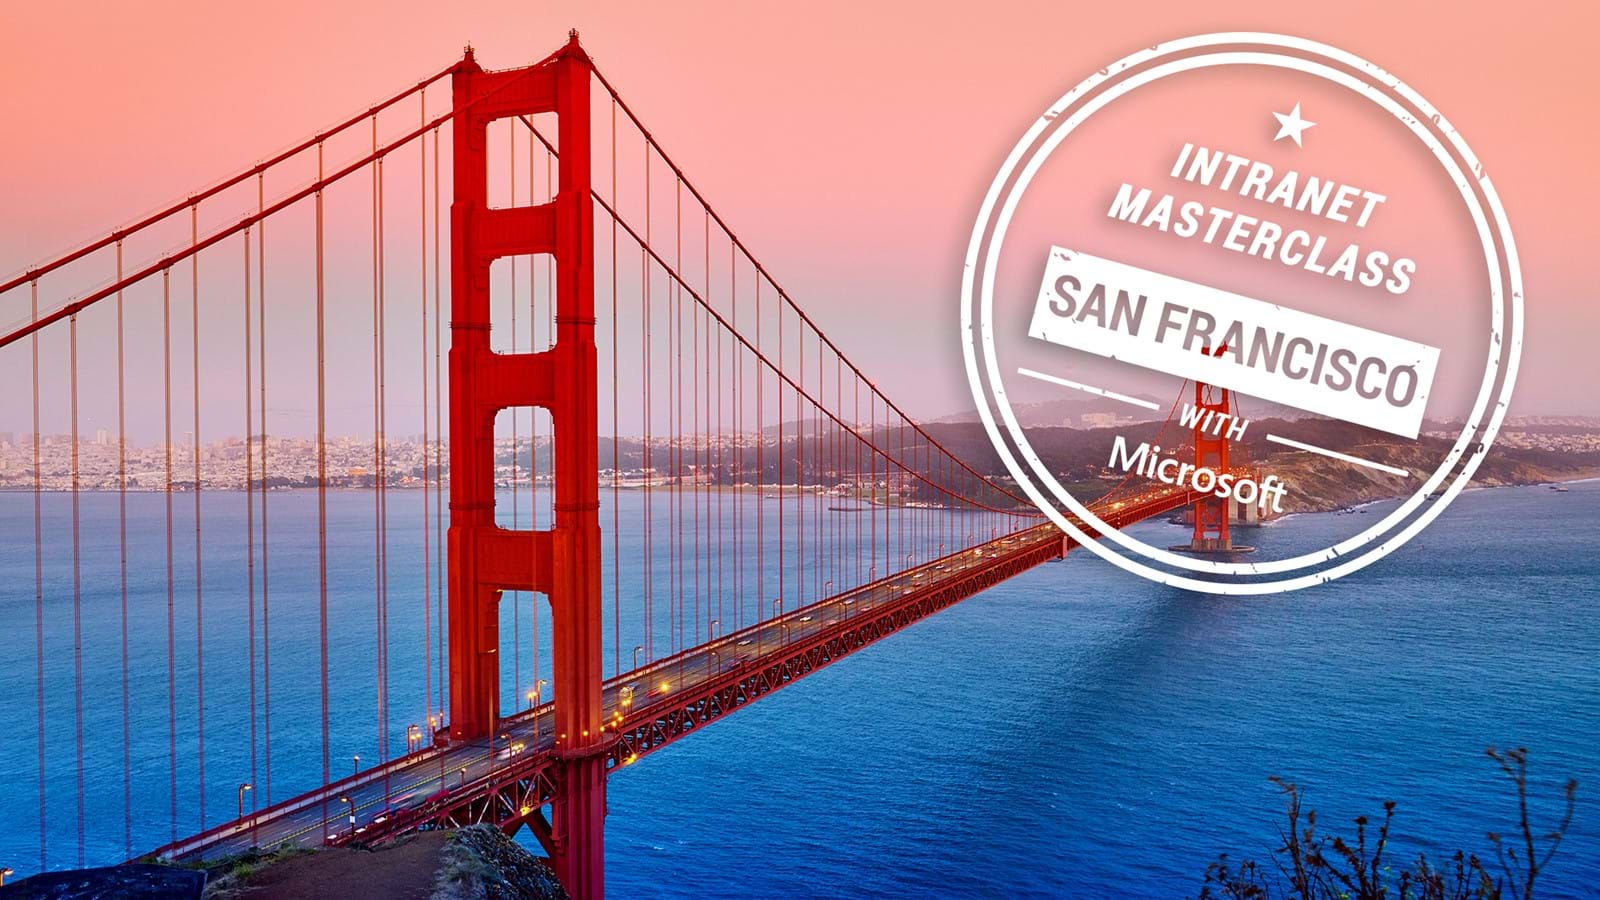 Golden Gate Bridge for intranet event